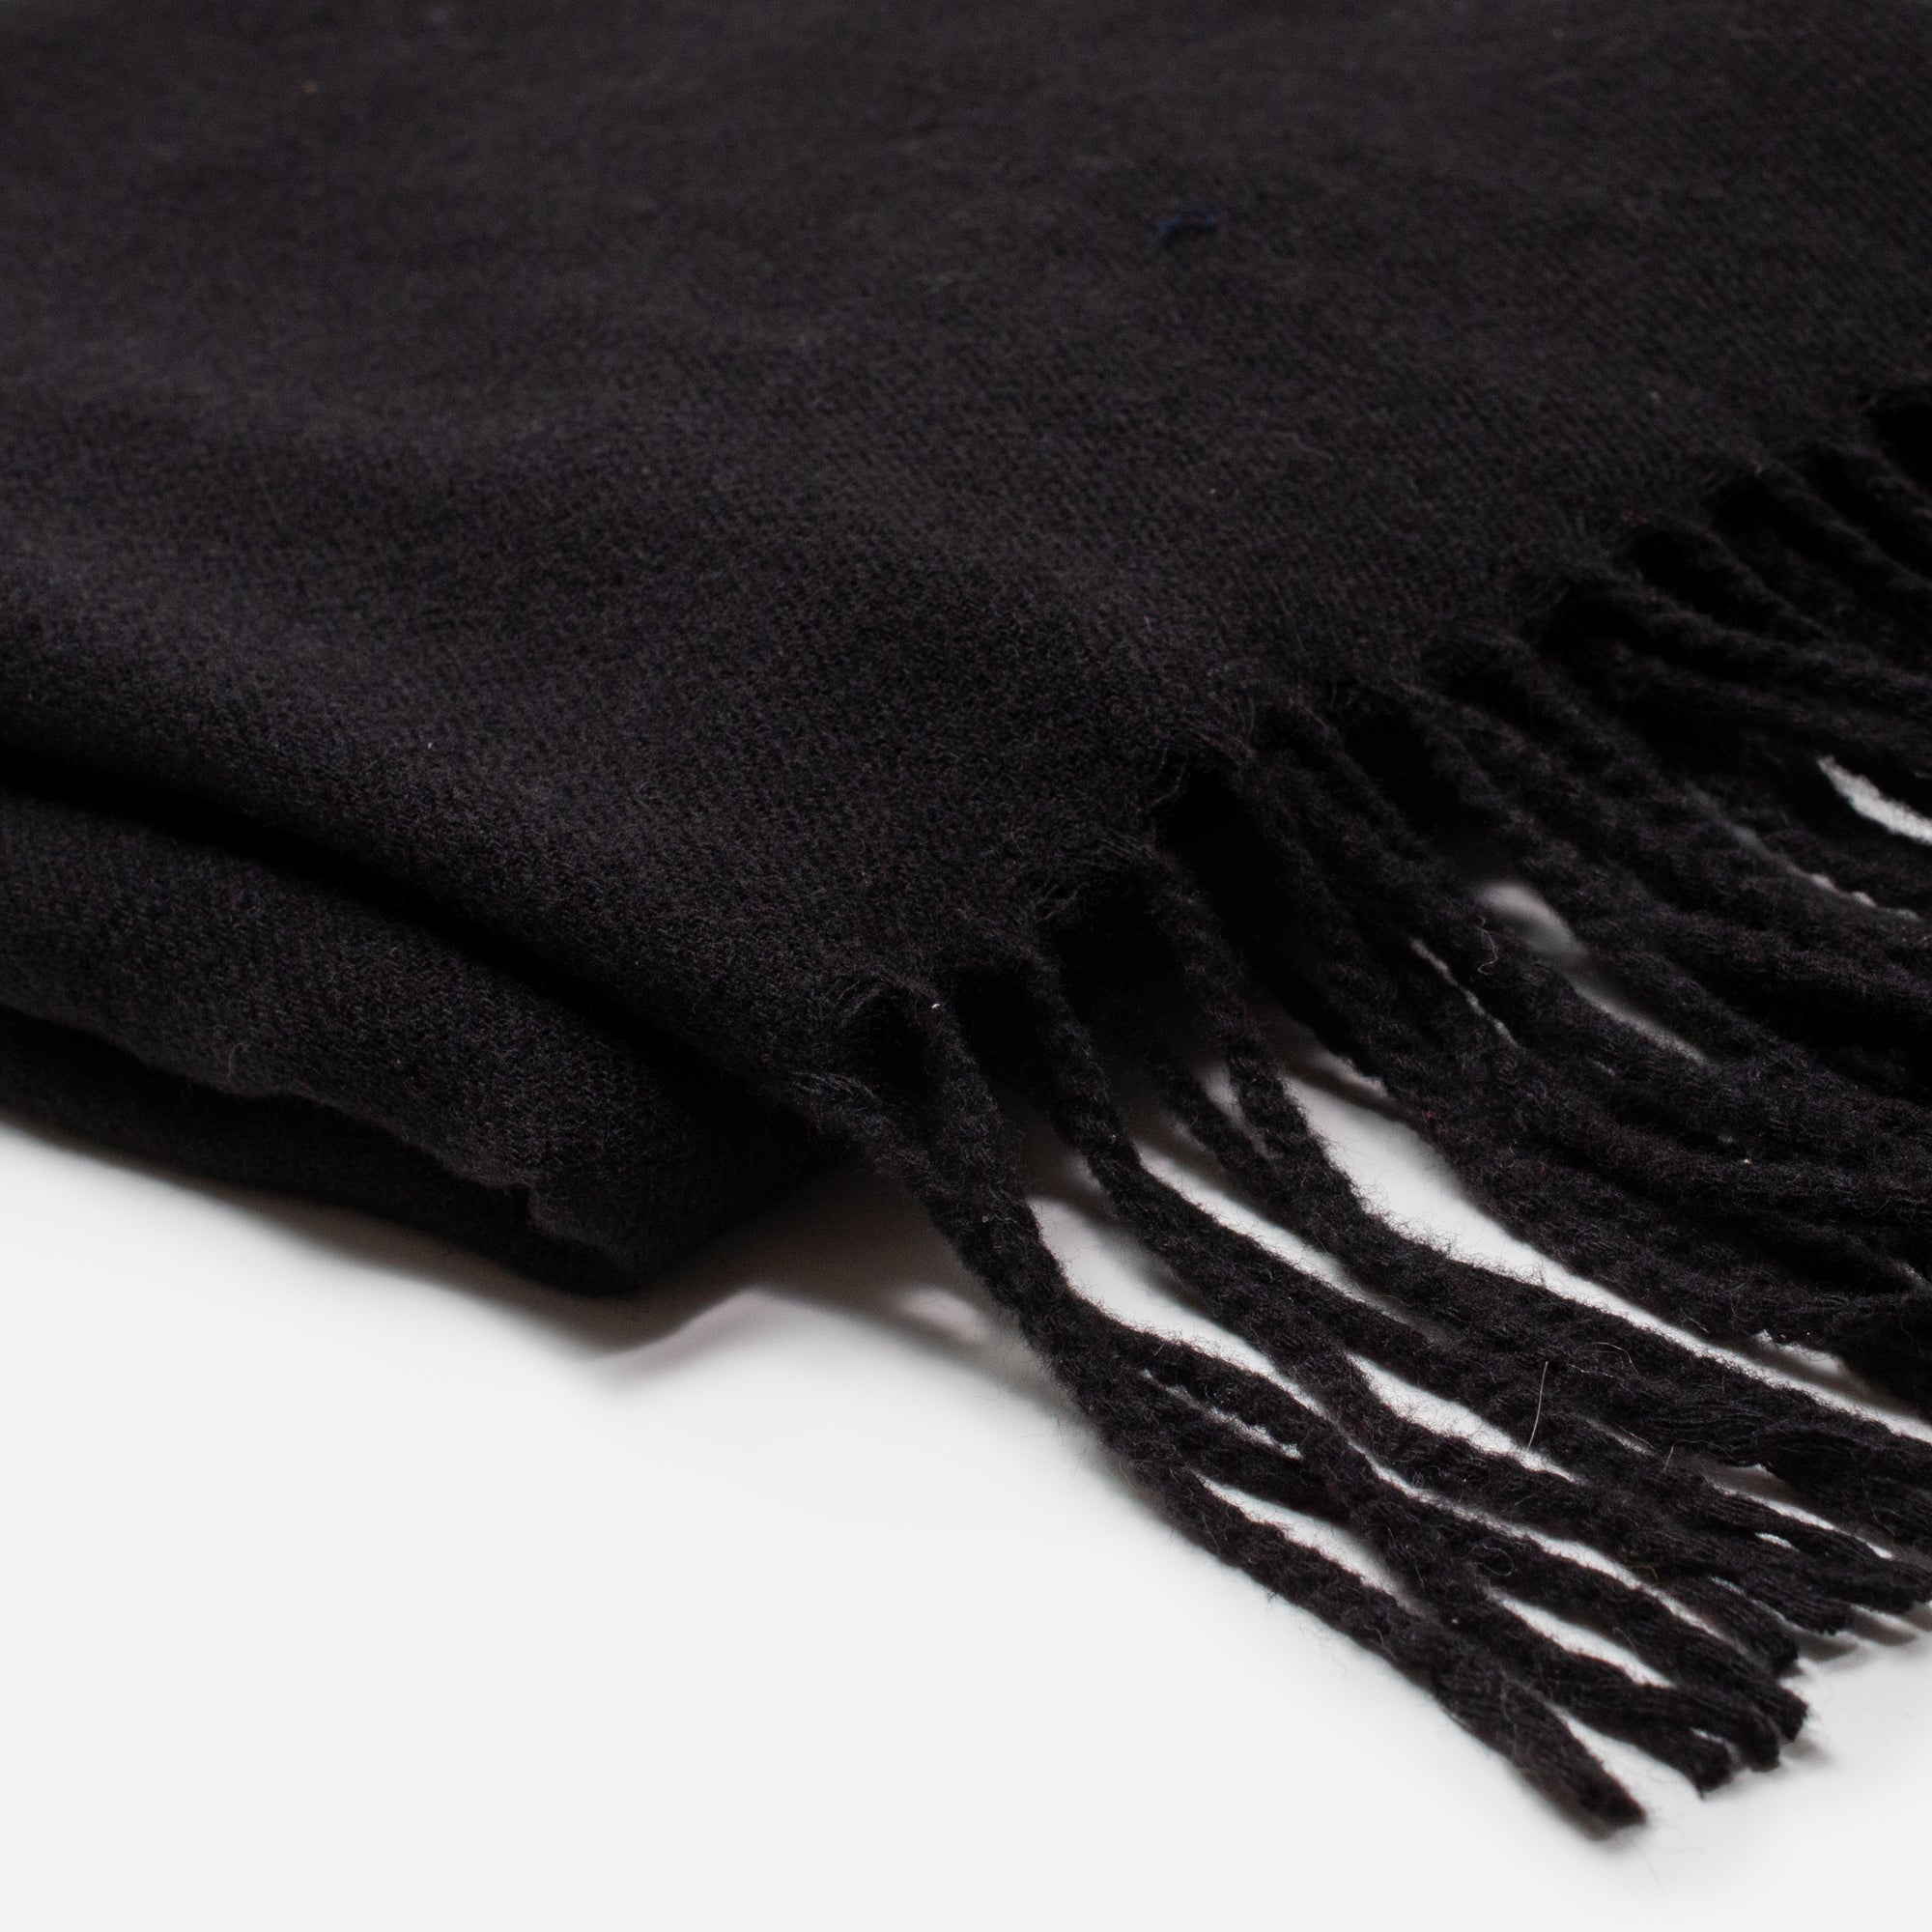 Black fringed scarf